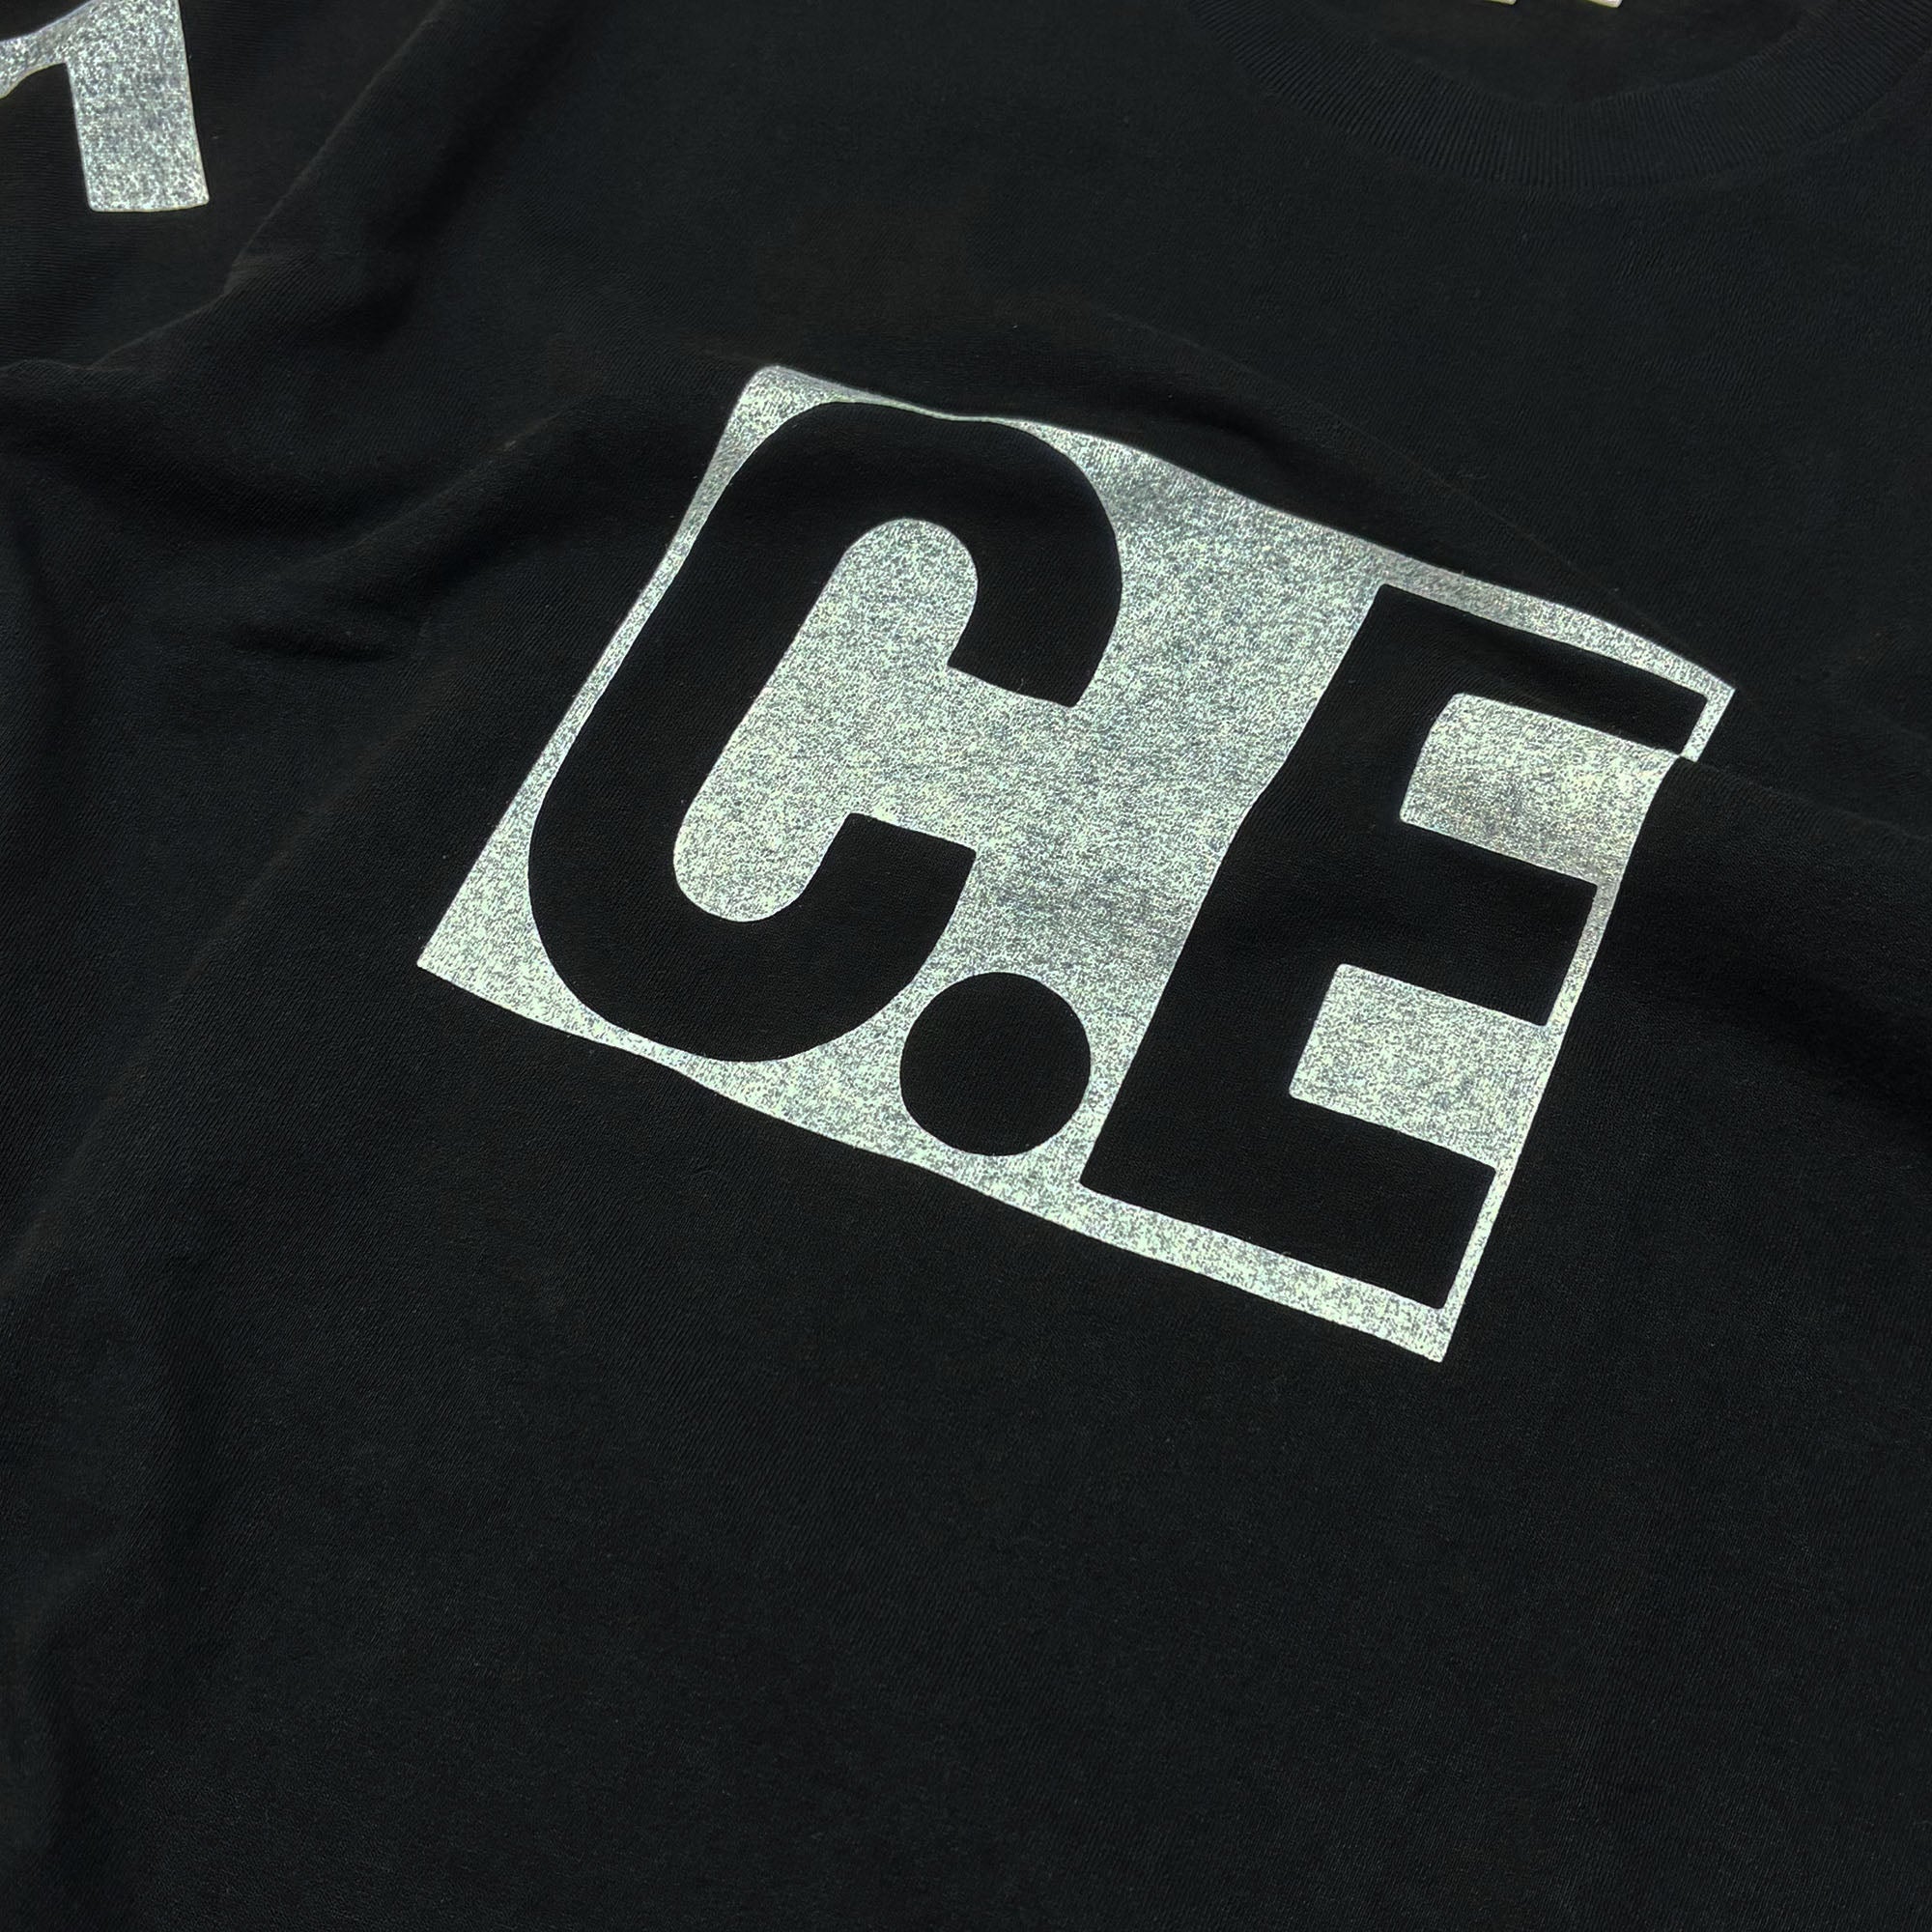 Cav Empt WB Type Noice T-Shirt Black